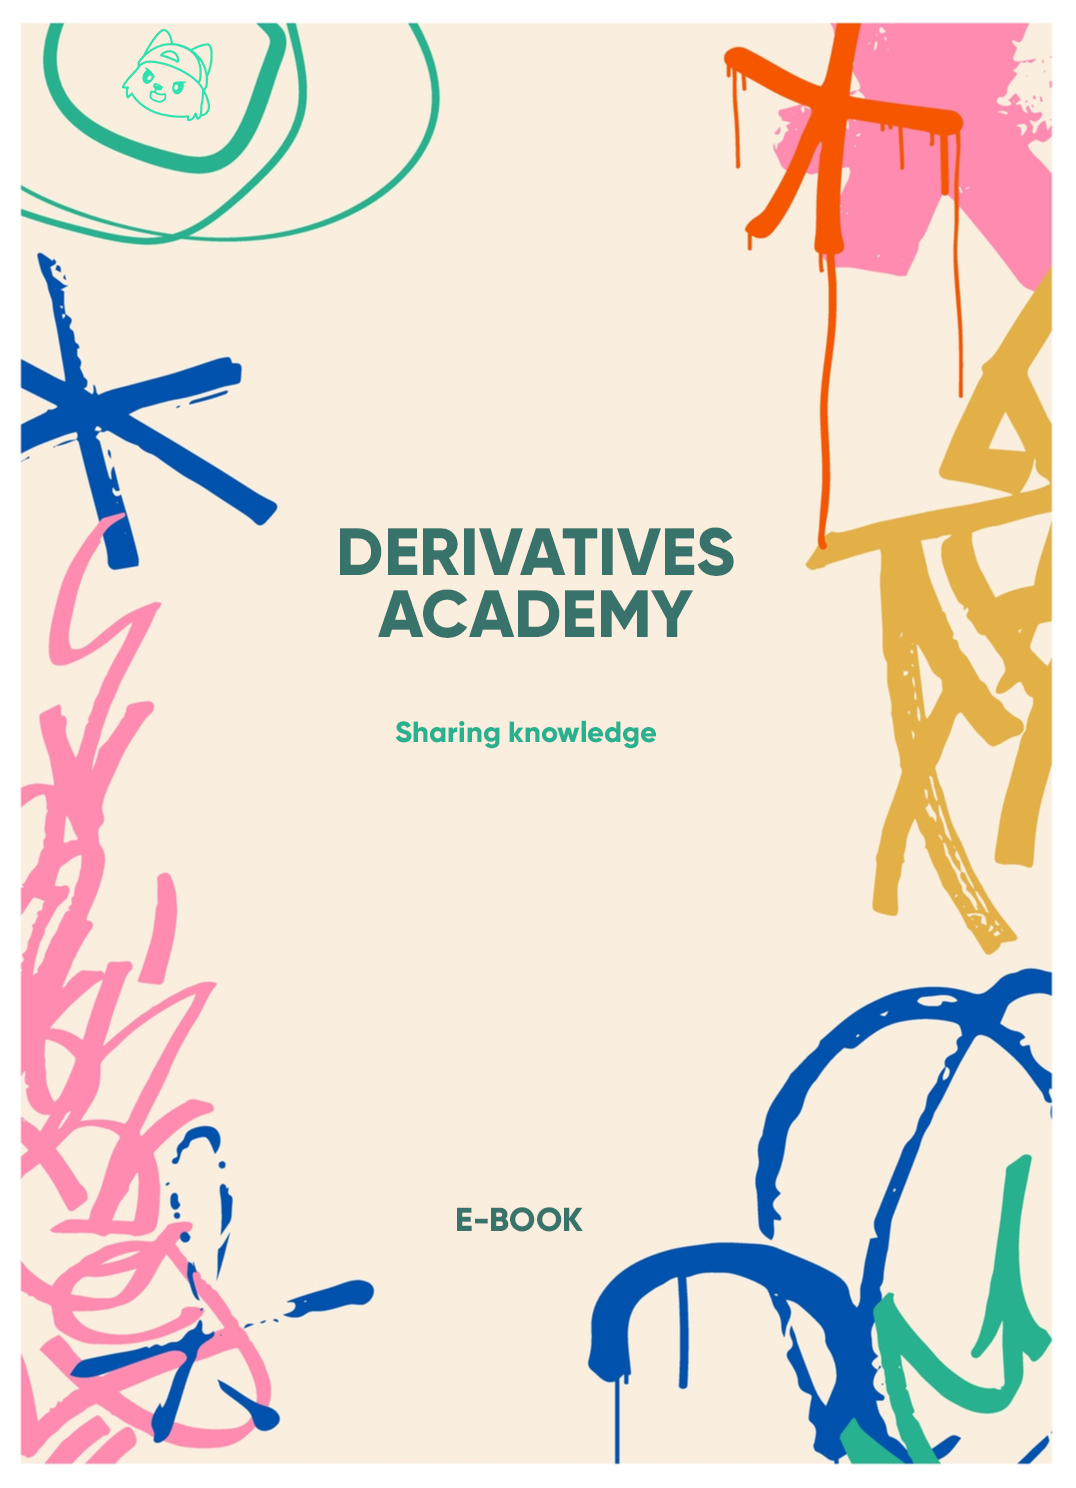 The Derivatives Academy